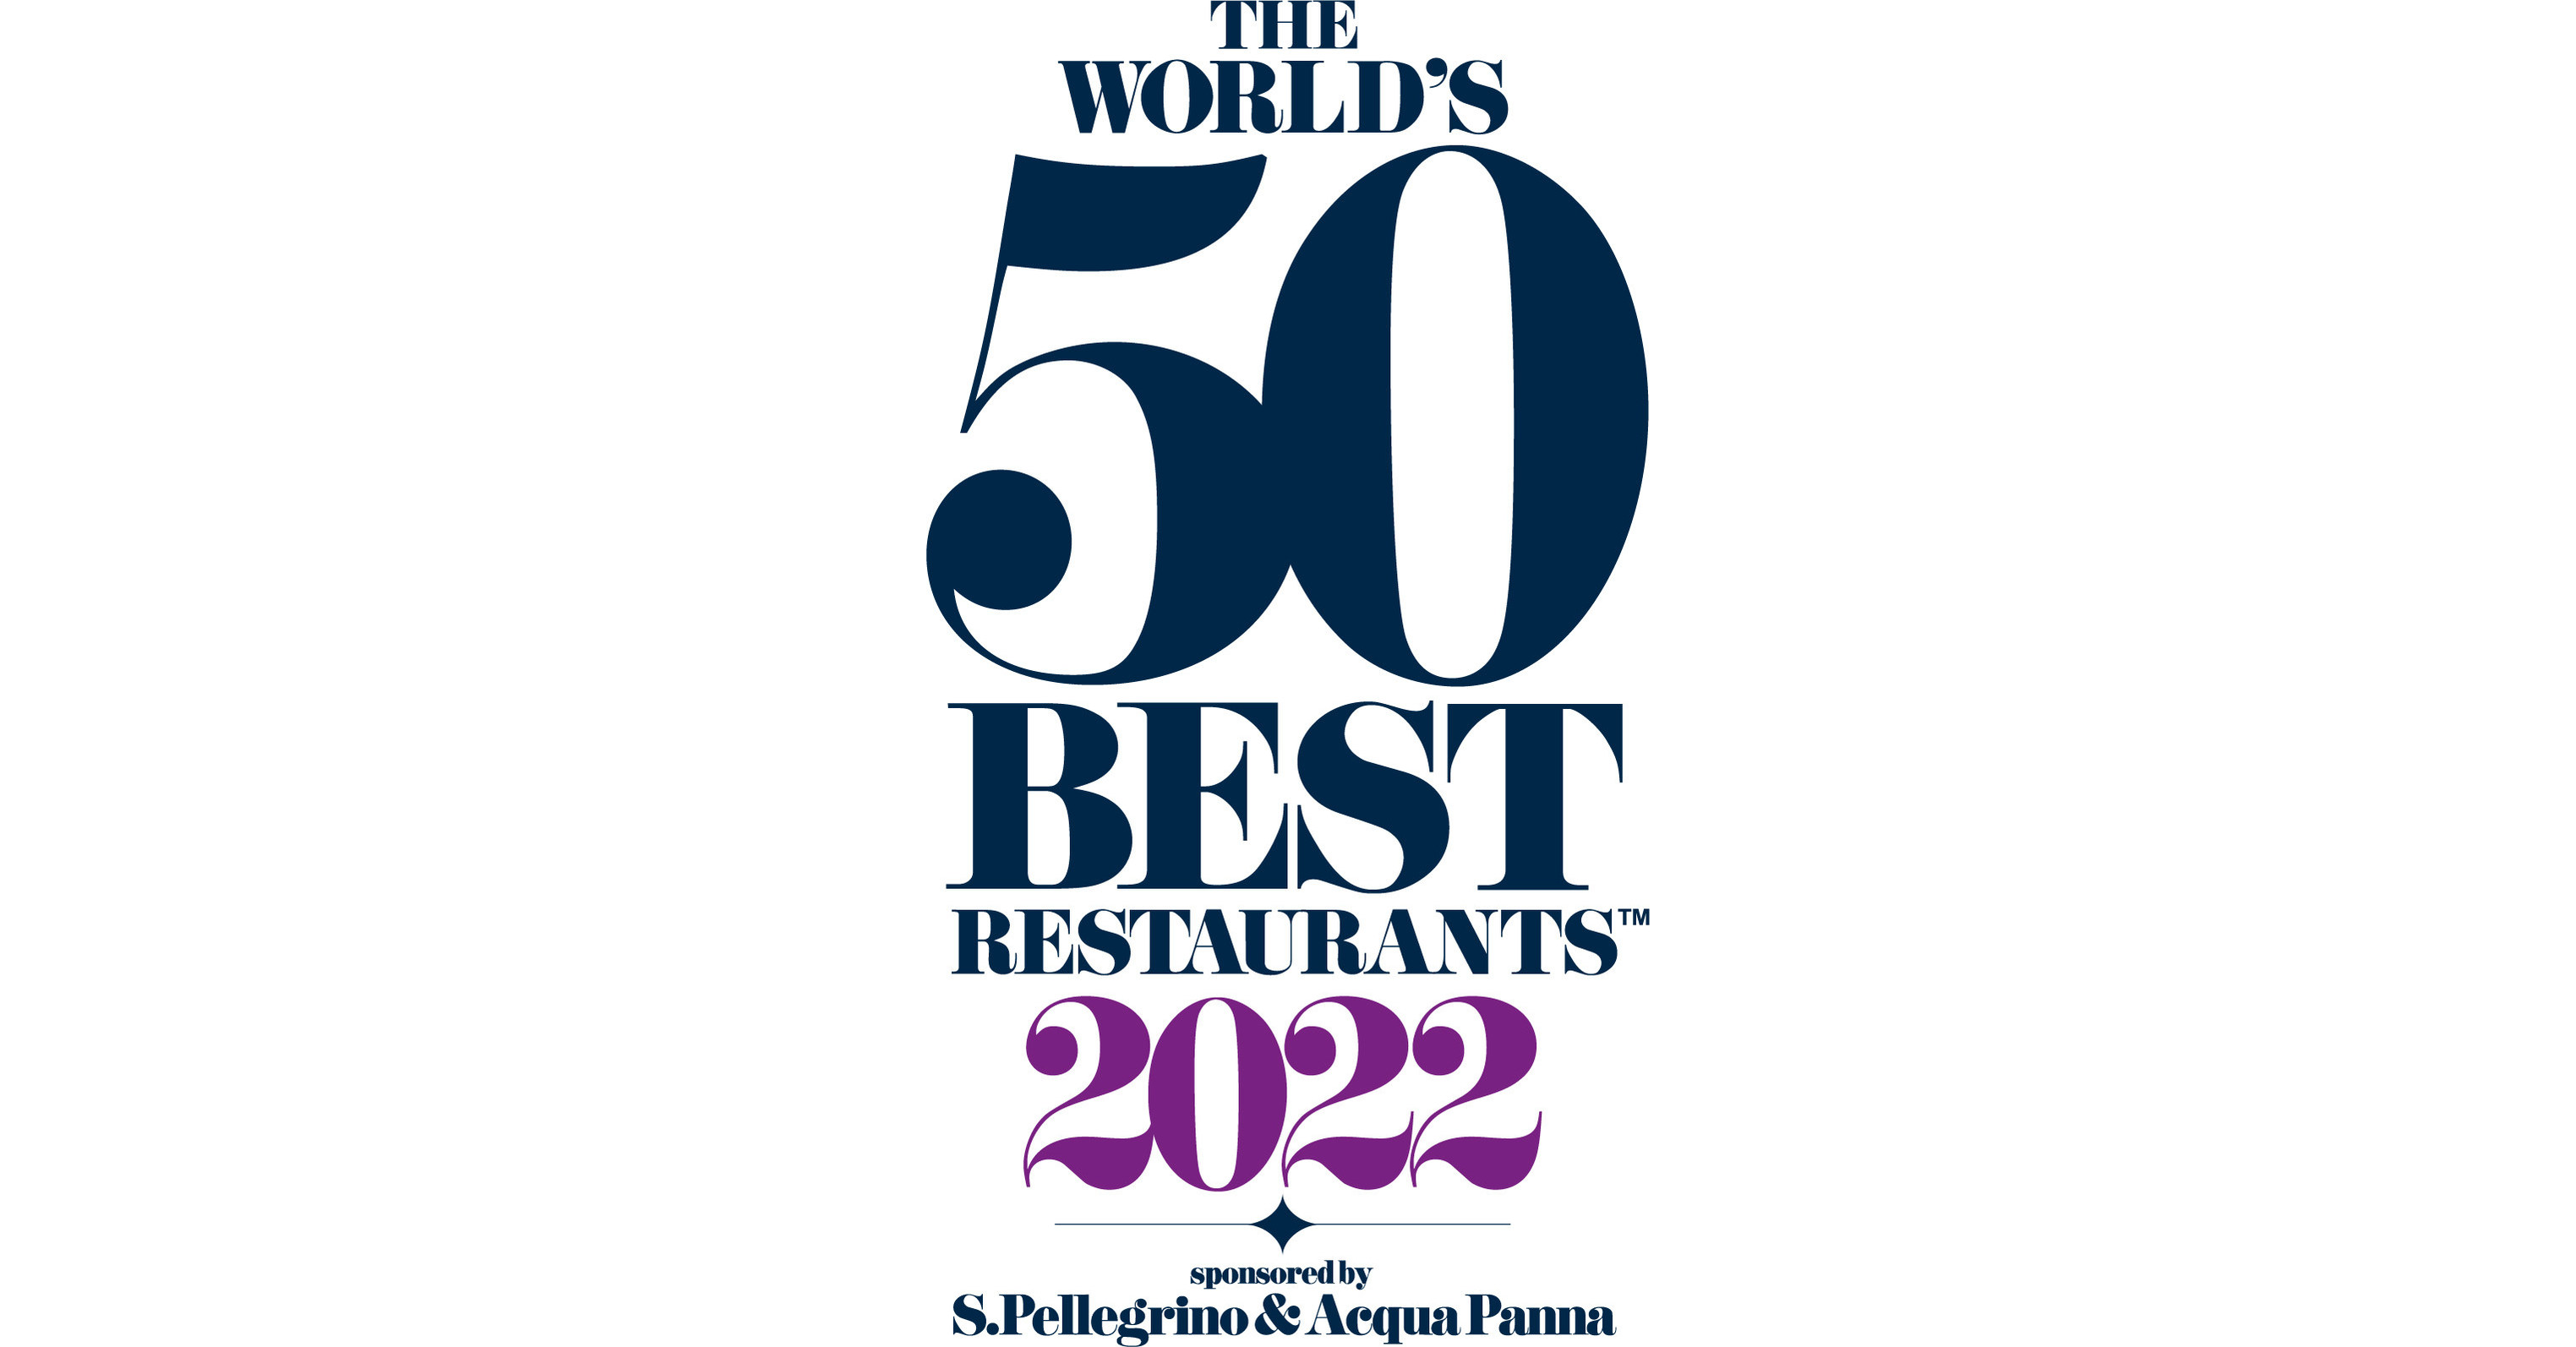 THE WORLD'S 50 BEST RESTAURANTS ANNOUNCES THE 51100 LIST FOR 2022